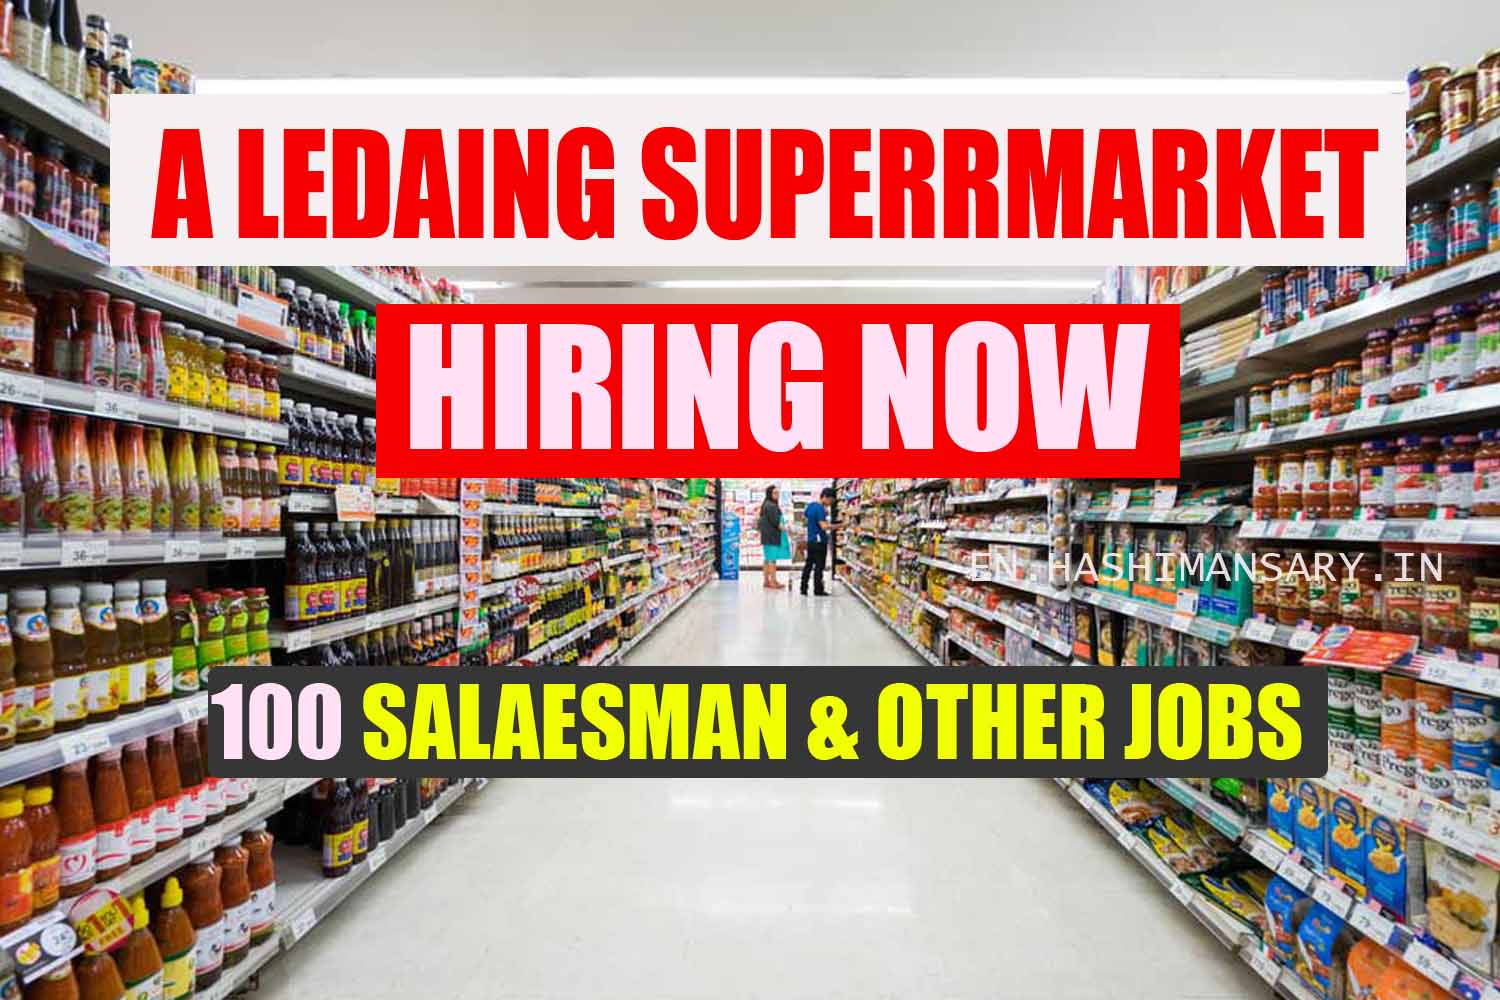 Salesman Job Vacancy In A Leading Supermarket Of UAE